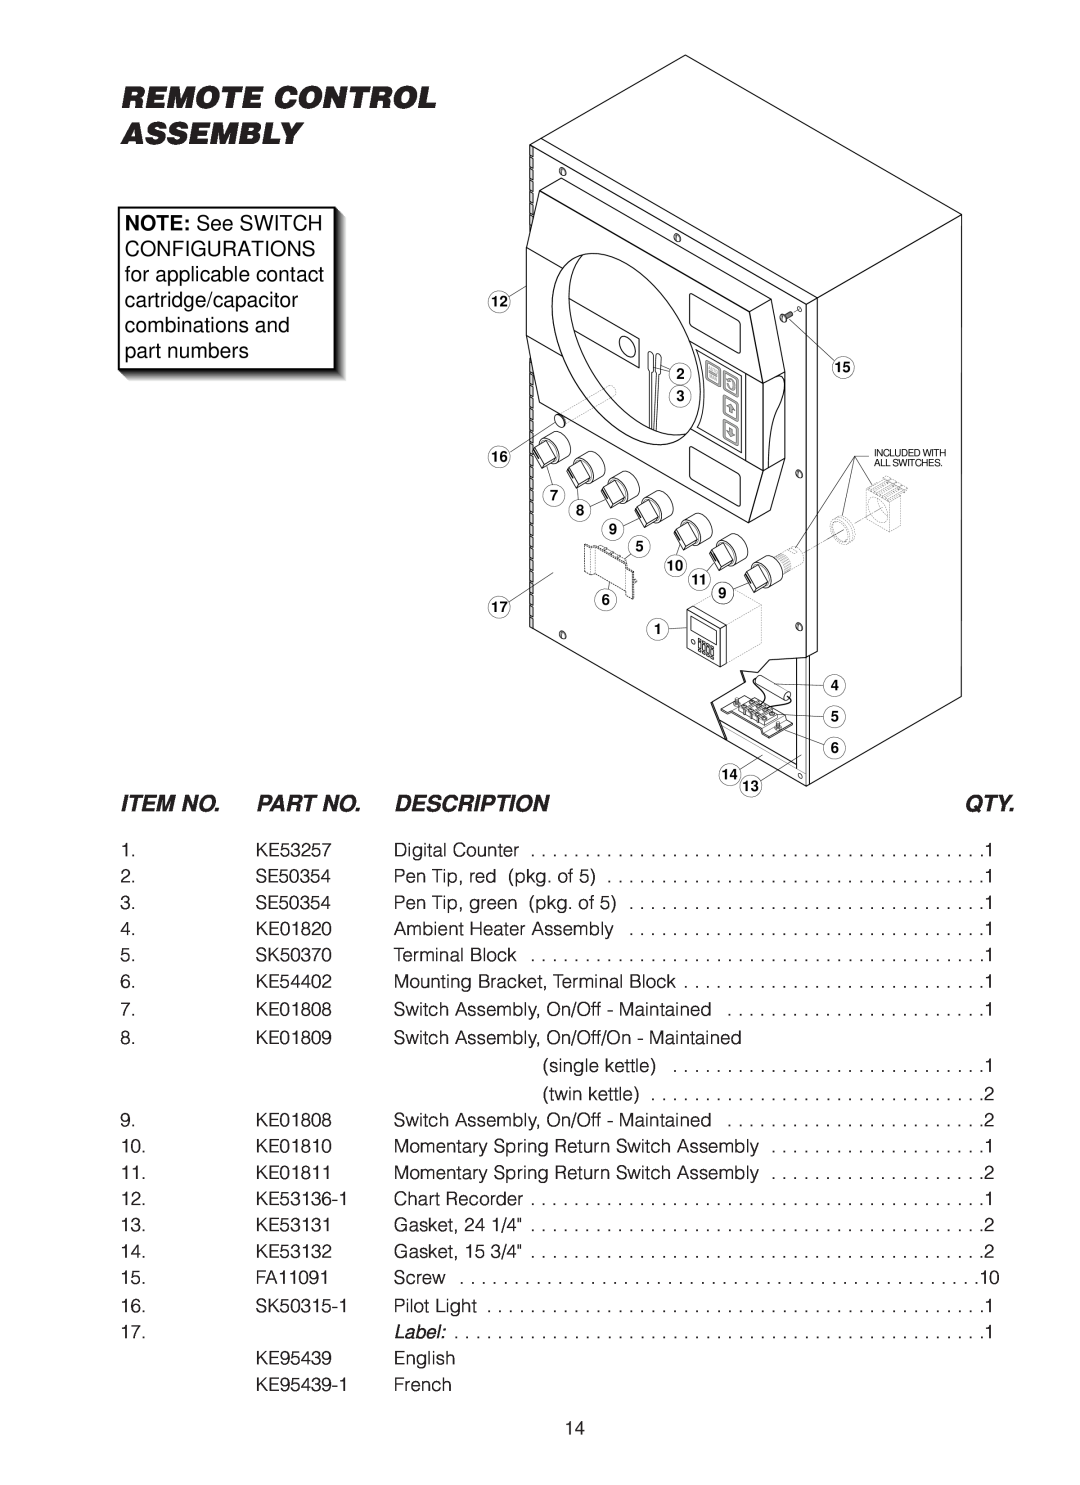 Cleveland Range MKDL-40-CC Remote Control Assembly, Item No, Description, Terminal Block, Chart Recorder, Gasket, 24 1/4 